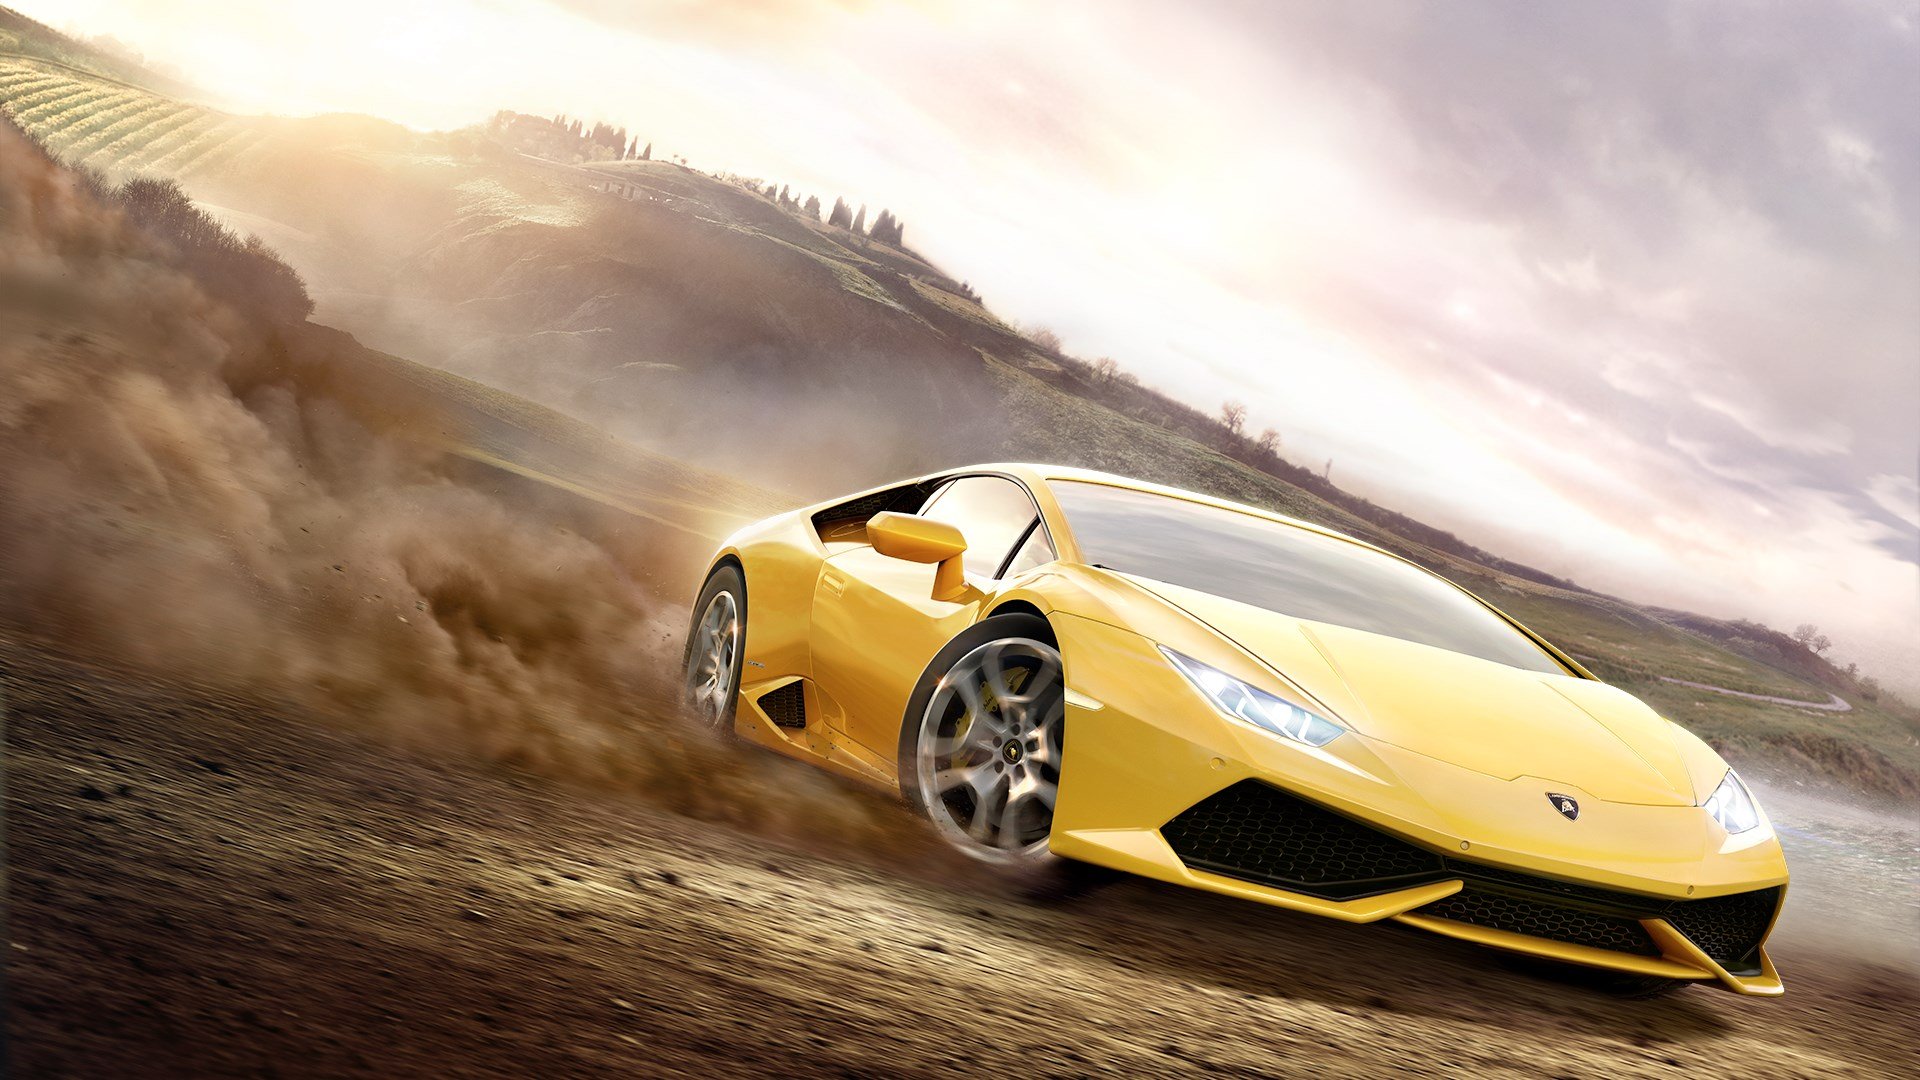 Forza Horizon 2 cover image